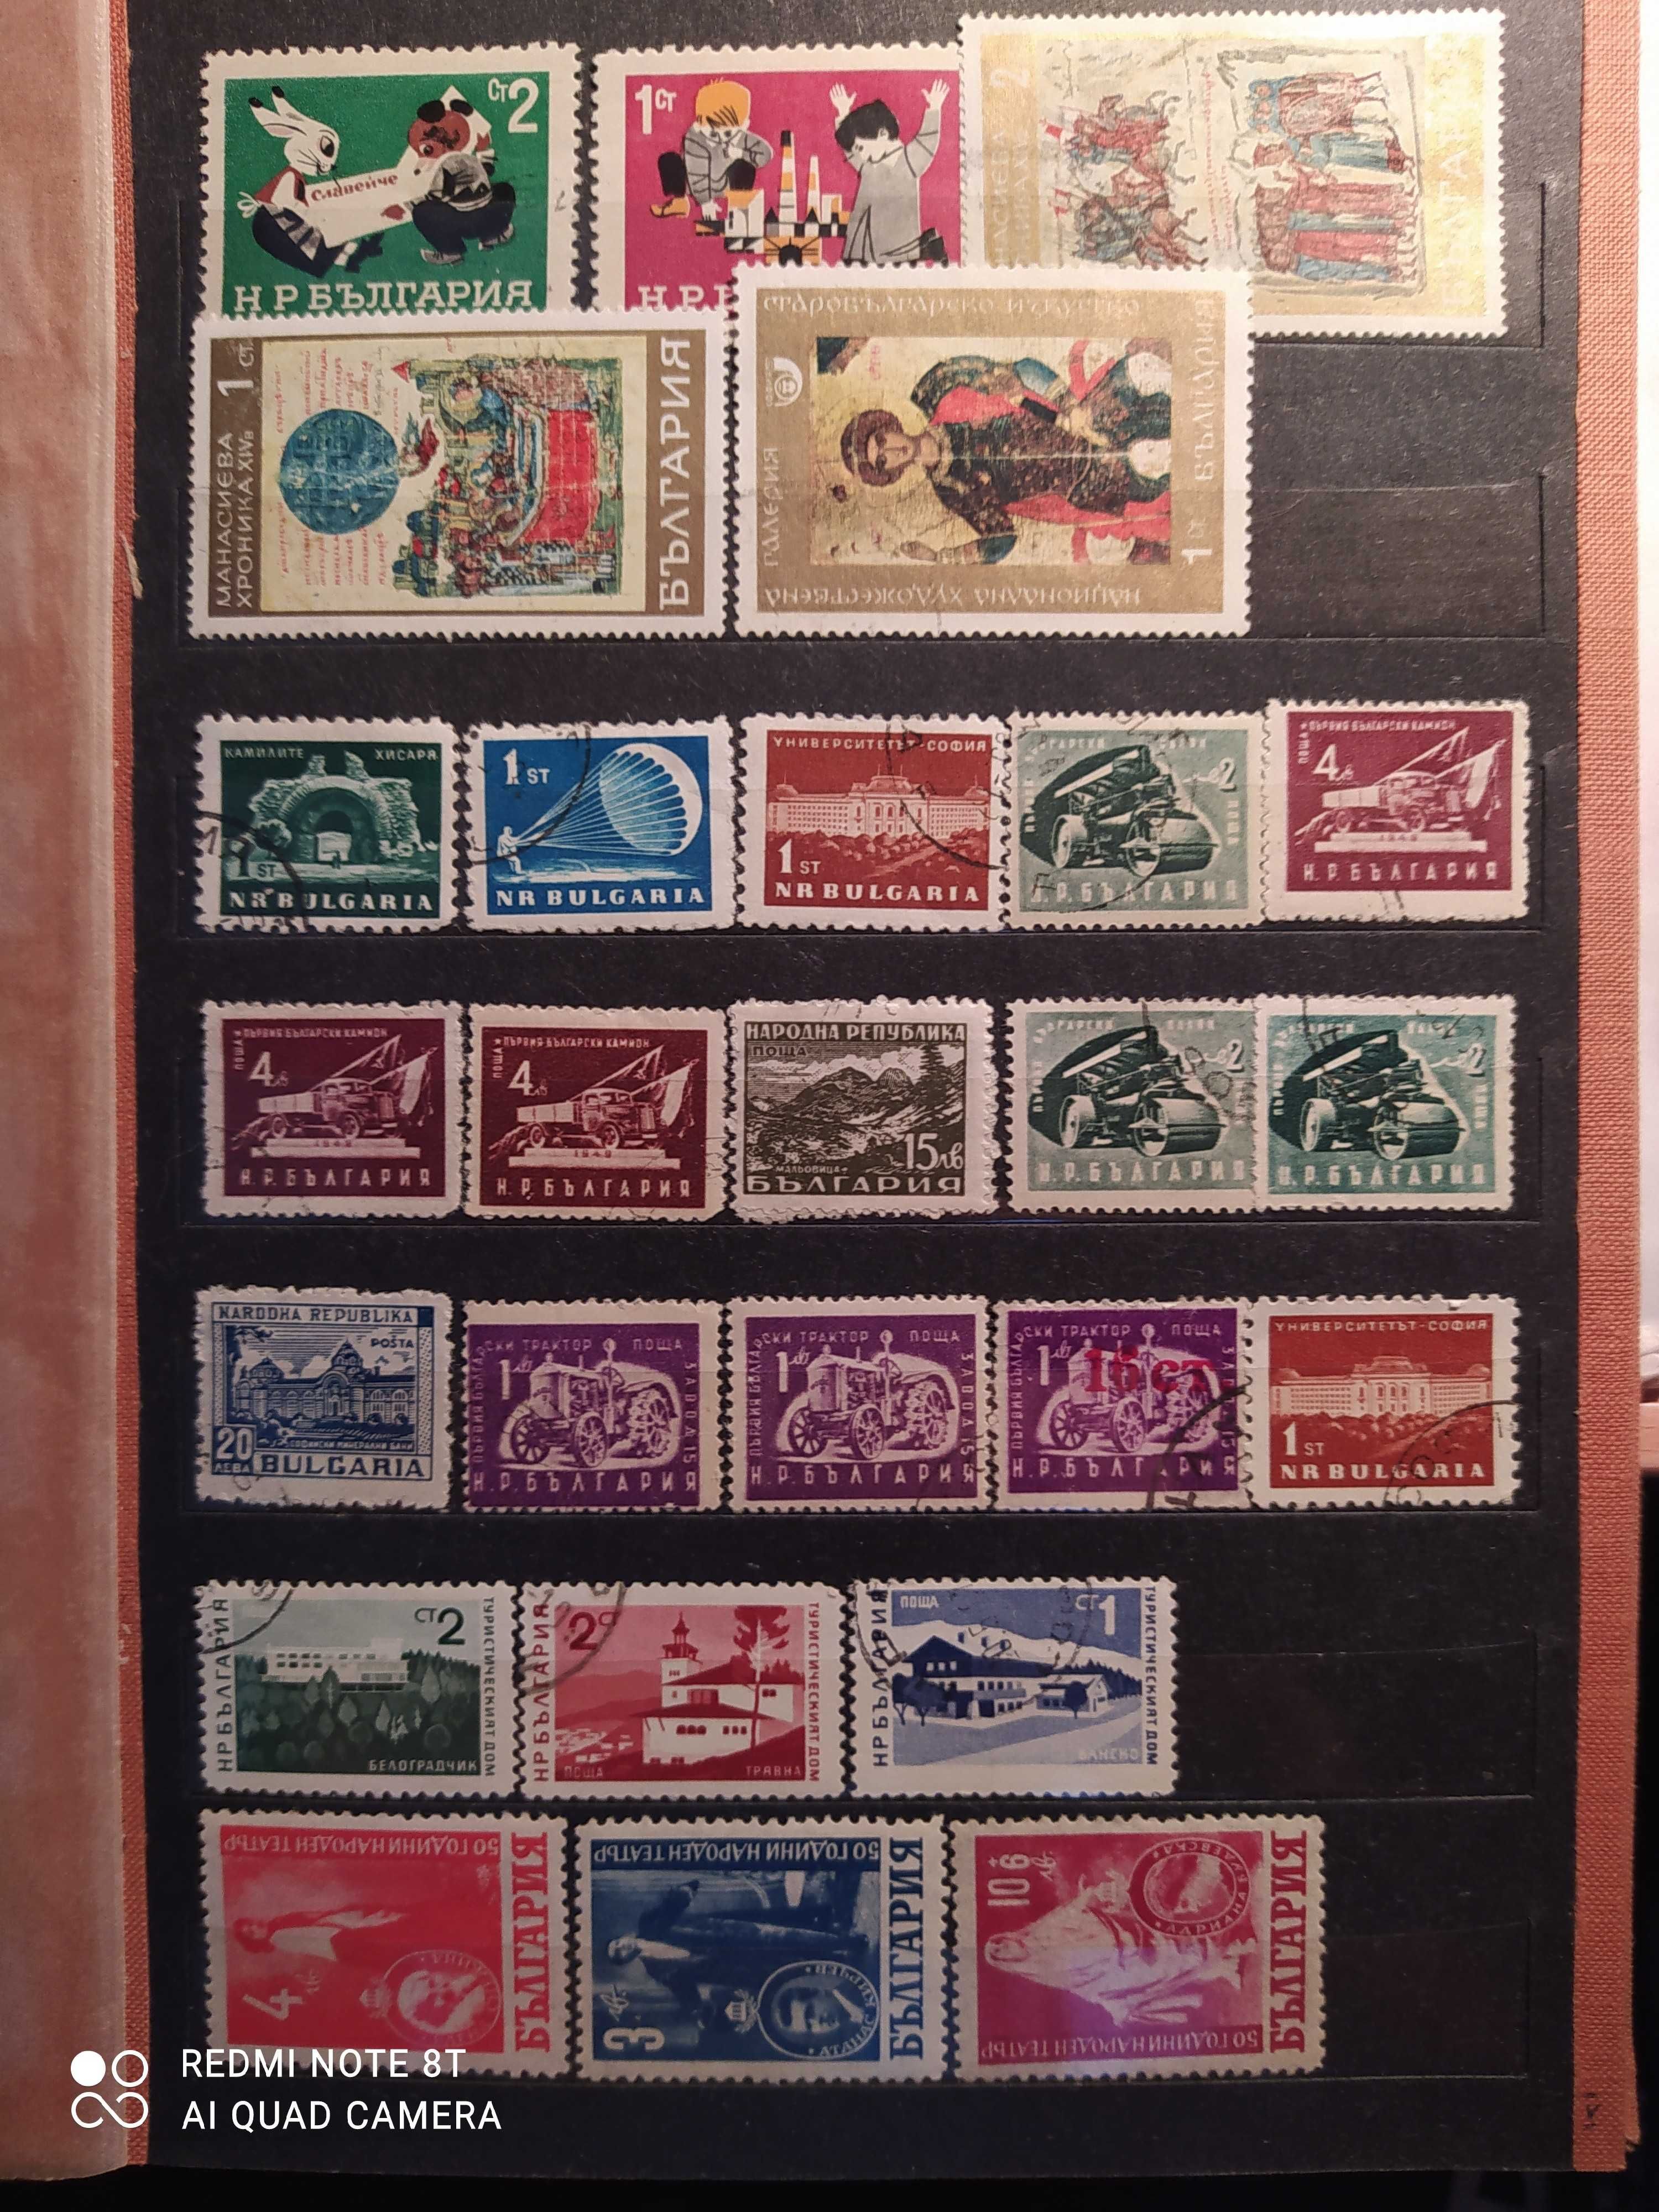 Bułgaria znaczki